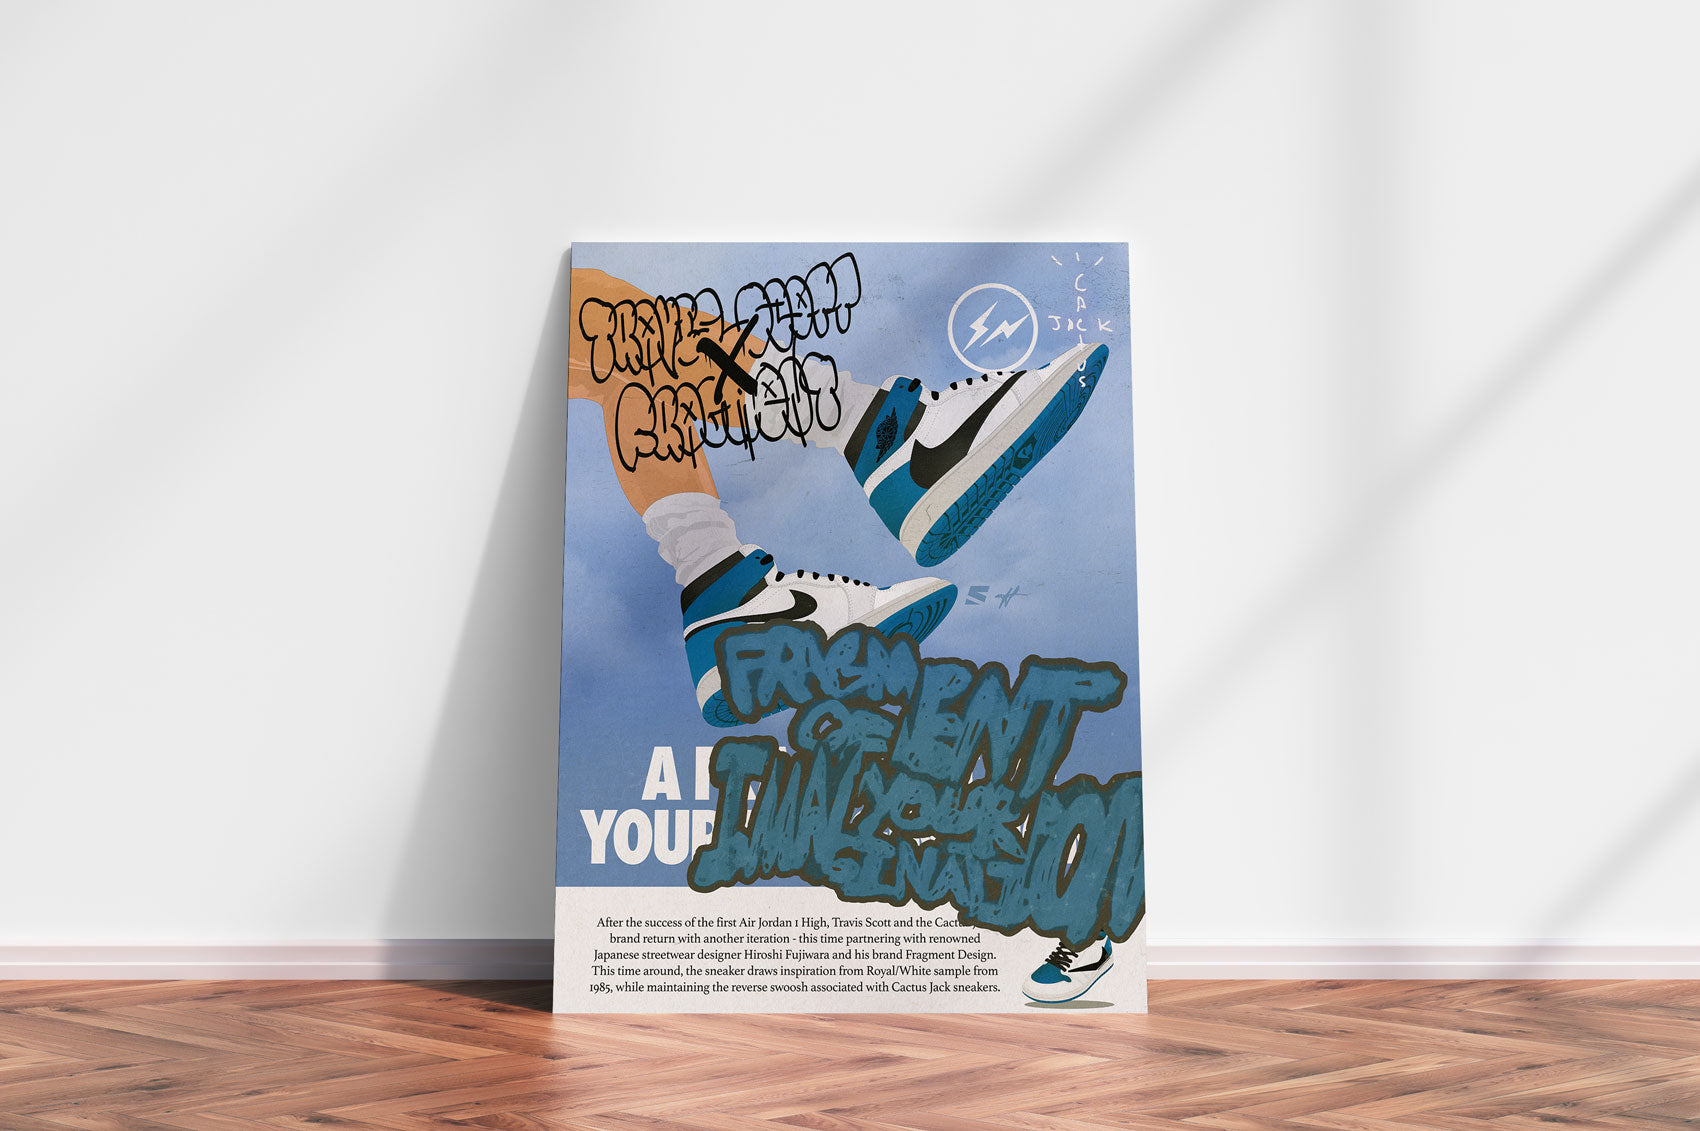 Travis Scott/Fragment x Air Jordan 1 Poster - A Fragment of Your Imagination - SALE